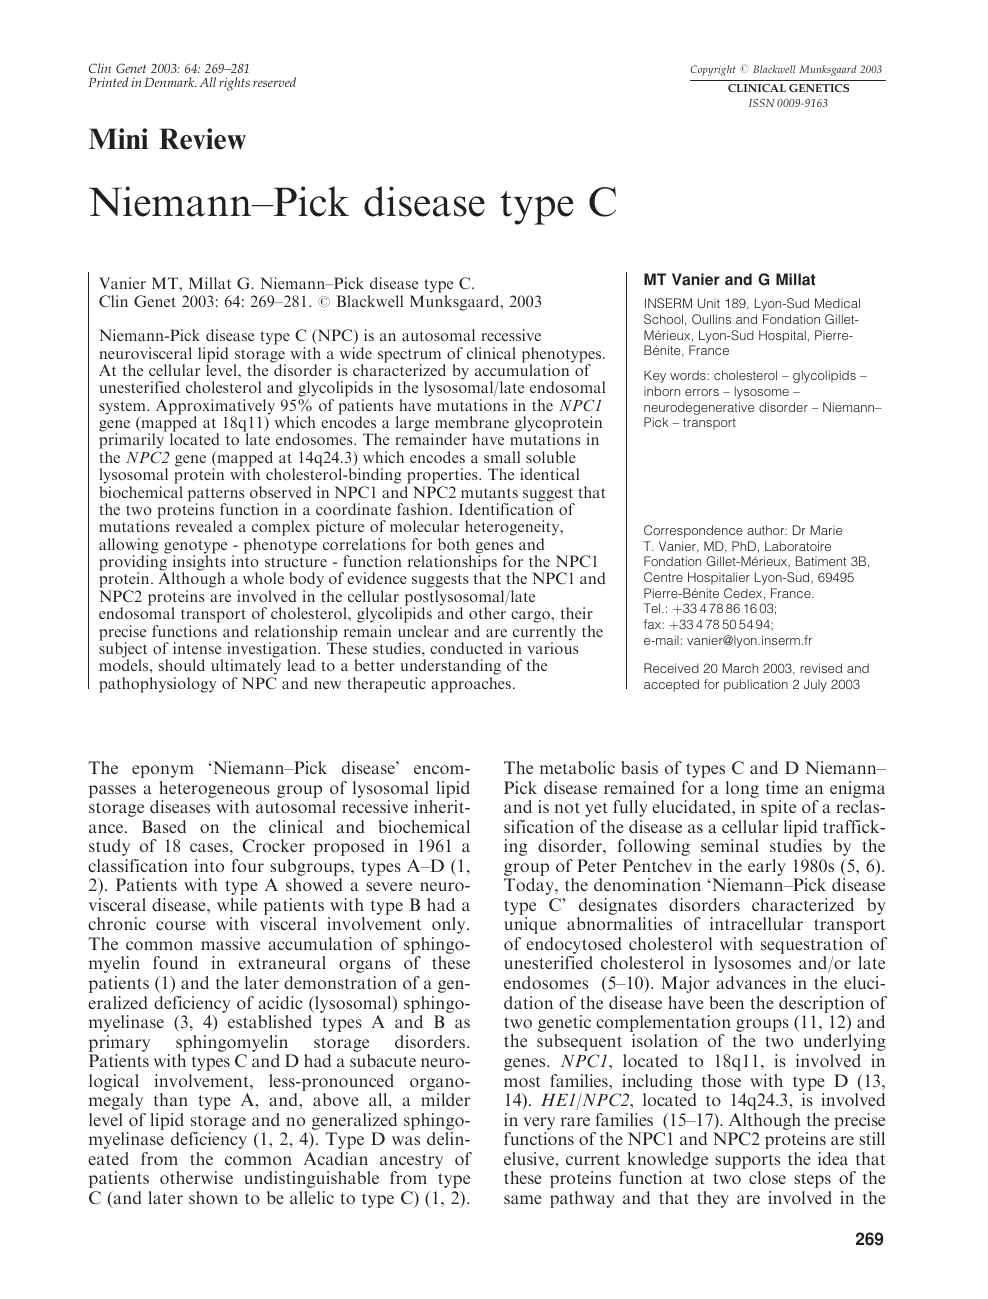 Laboratory diagnosis of Niemann–Pick disease type C: The filipin